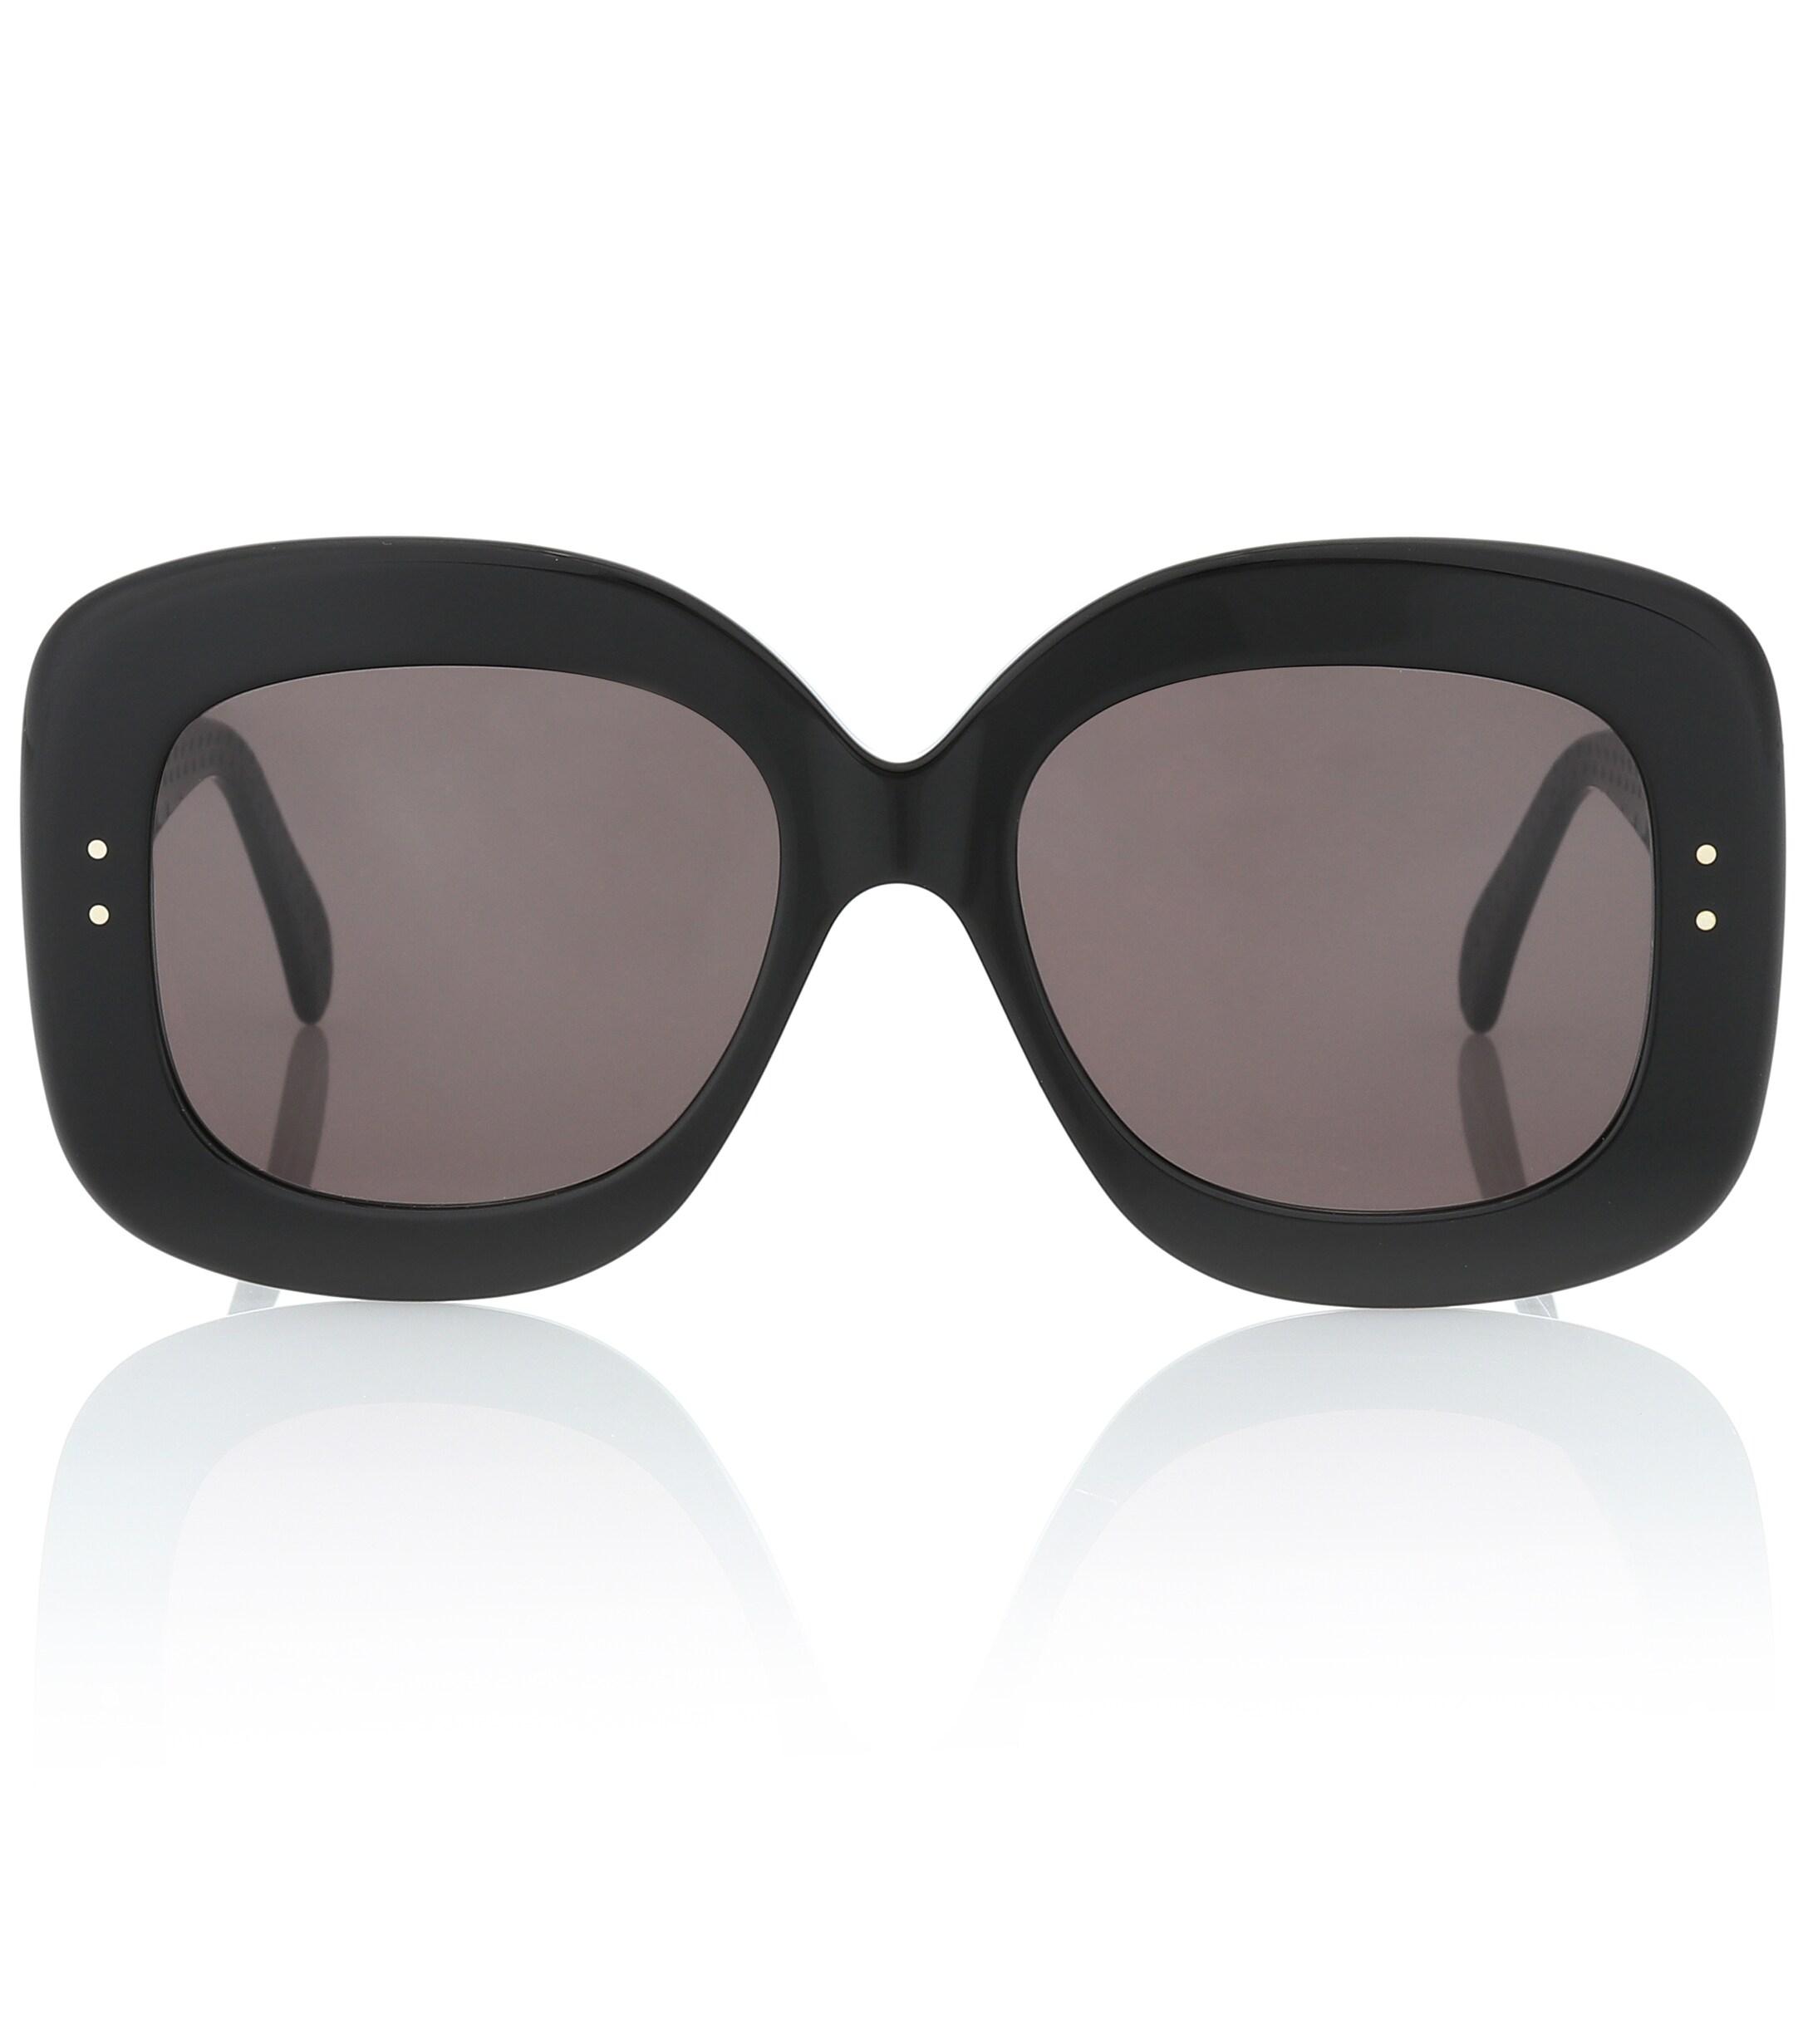 Alaïa Square Sunglasses in Black - Lyst